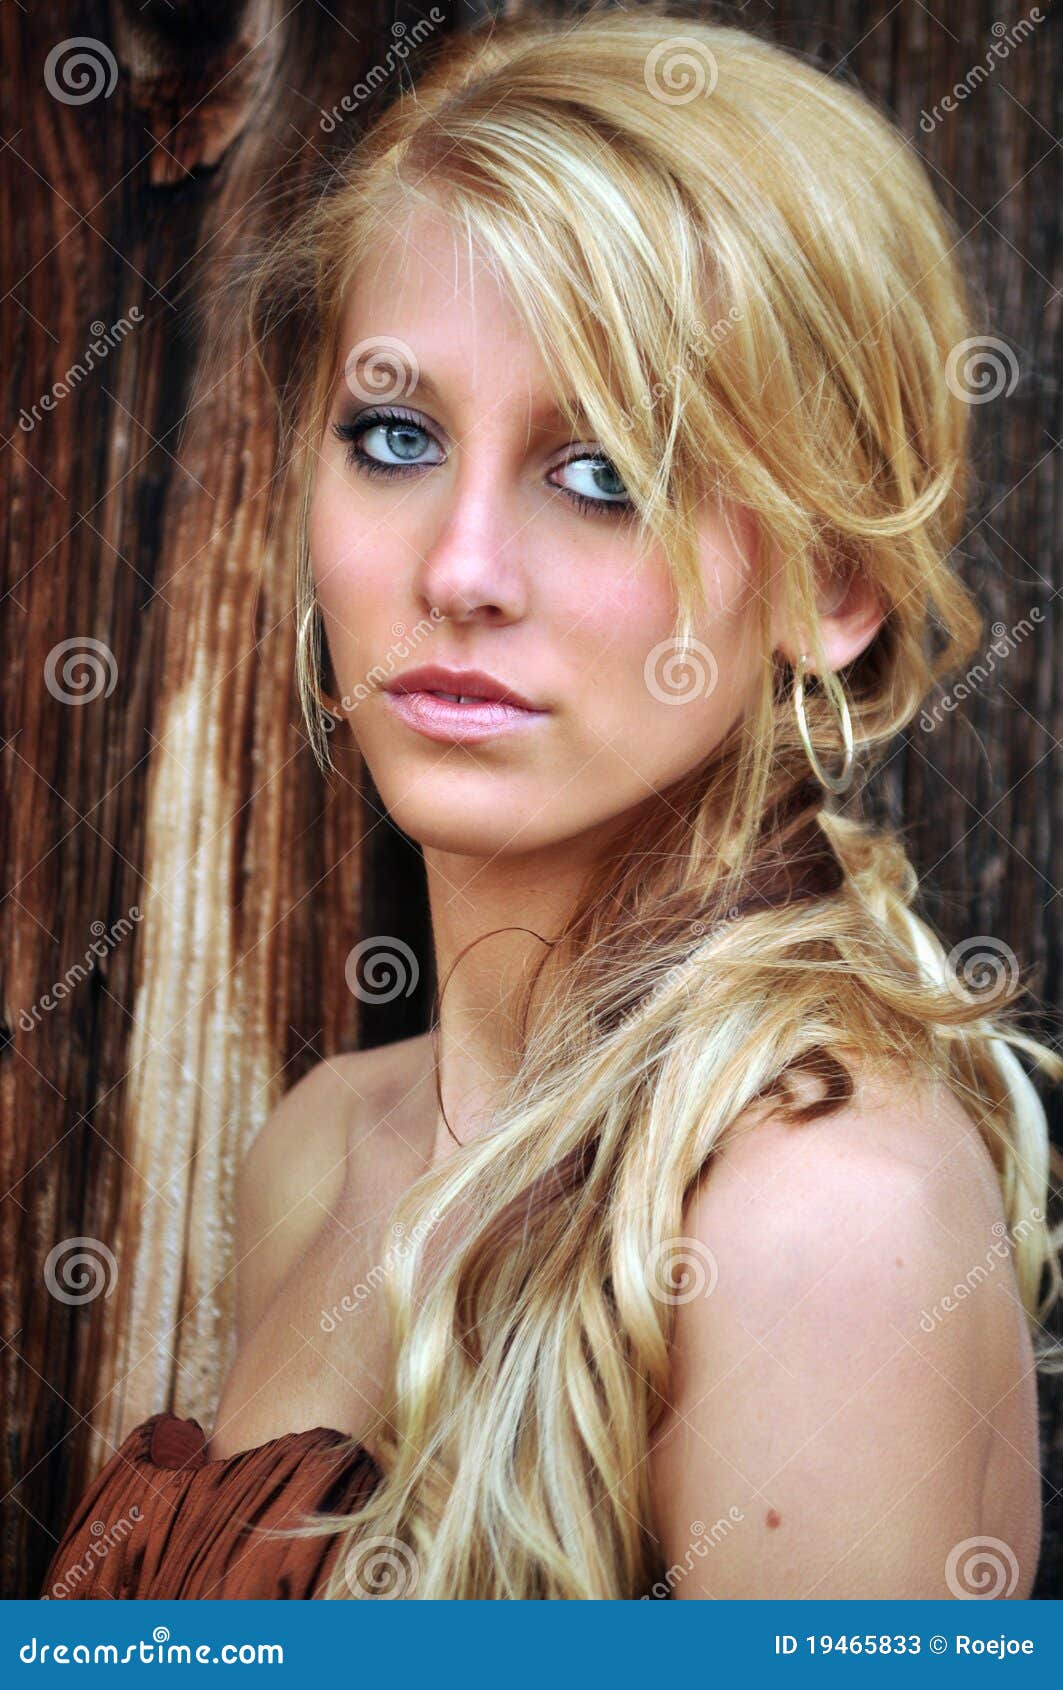 pretty-young-woman-long-blonde-hair-19465833.jpg